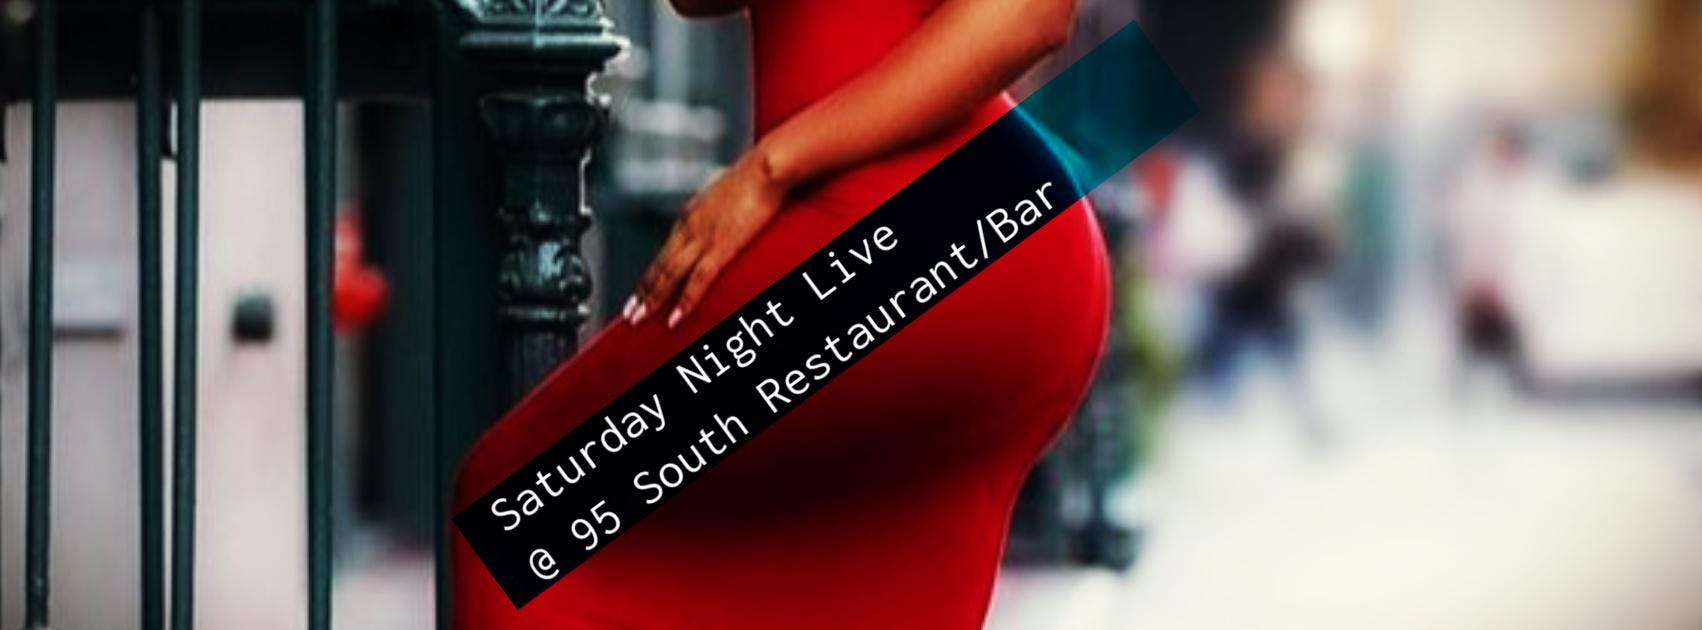 Saturday Night Live @ 95 South Restaurant/Bar